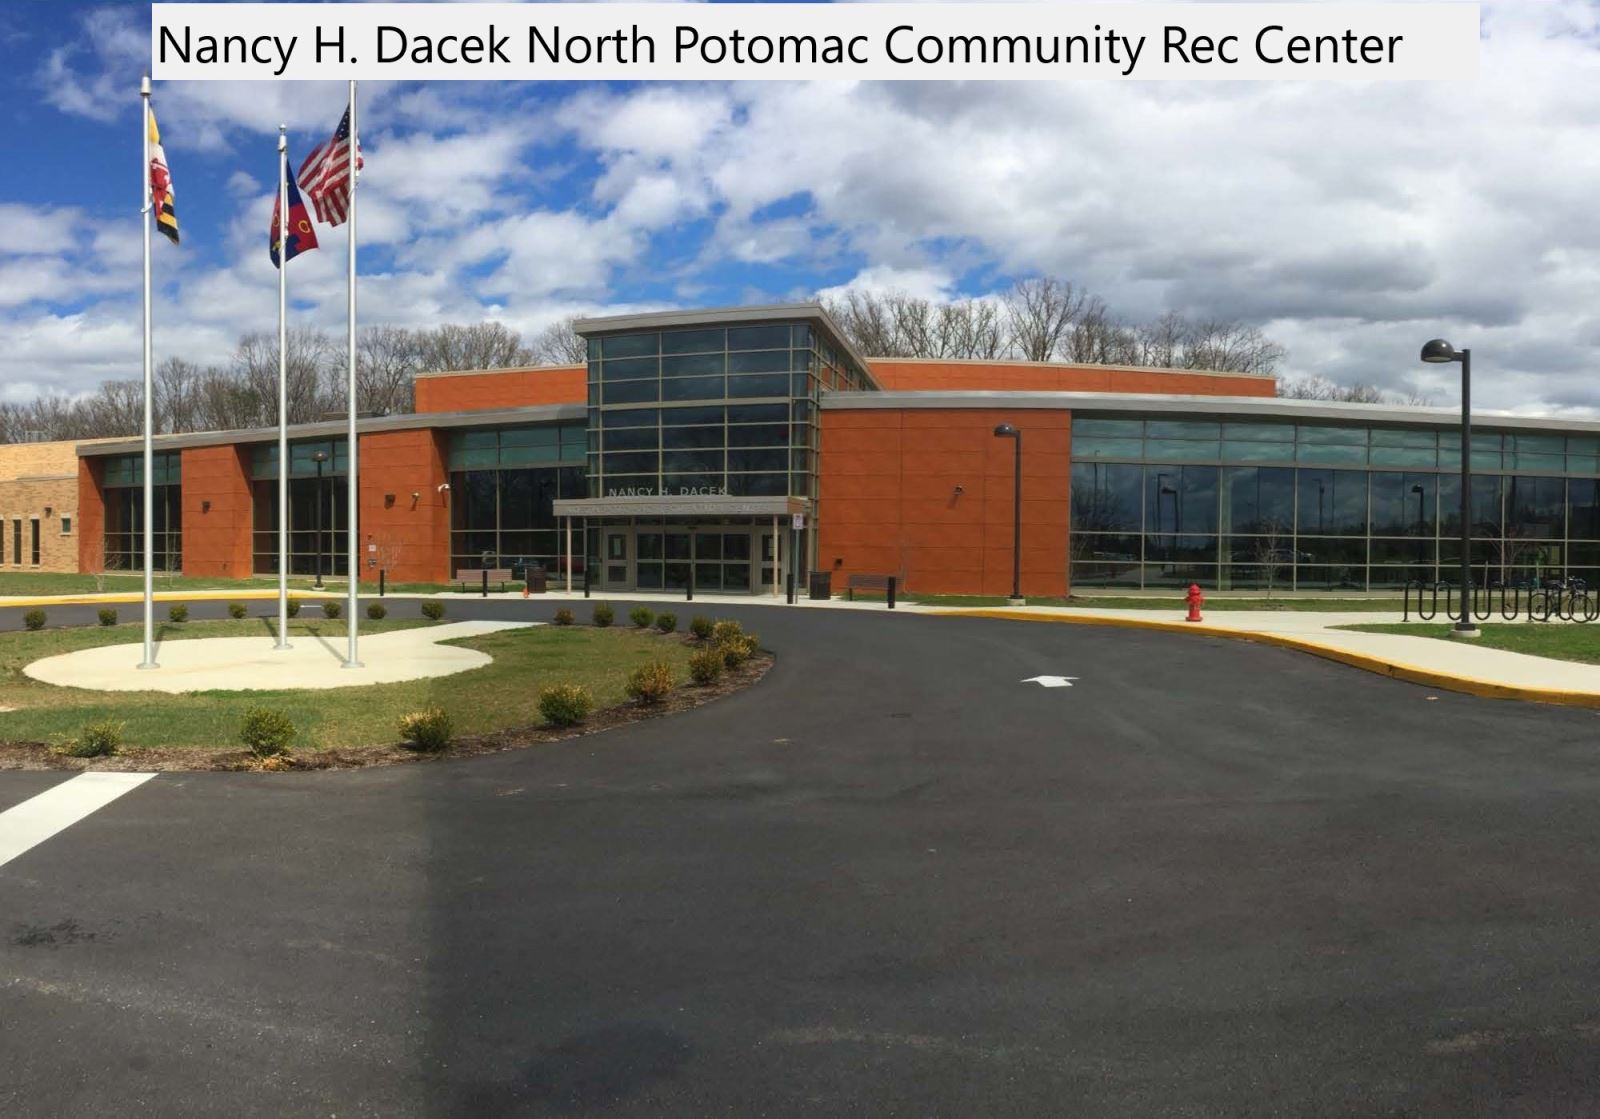 Nancy H. Dacek North Potomac Community Recreation Center. 